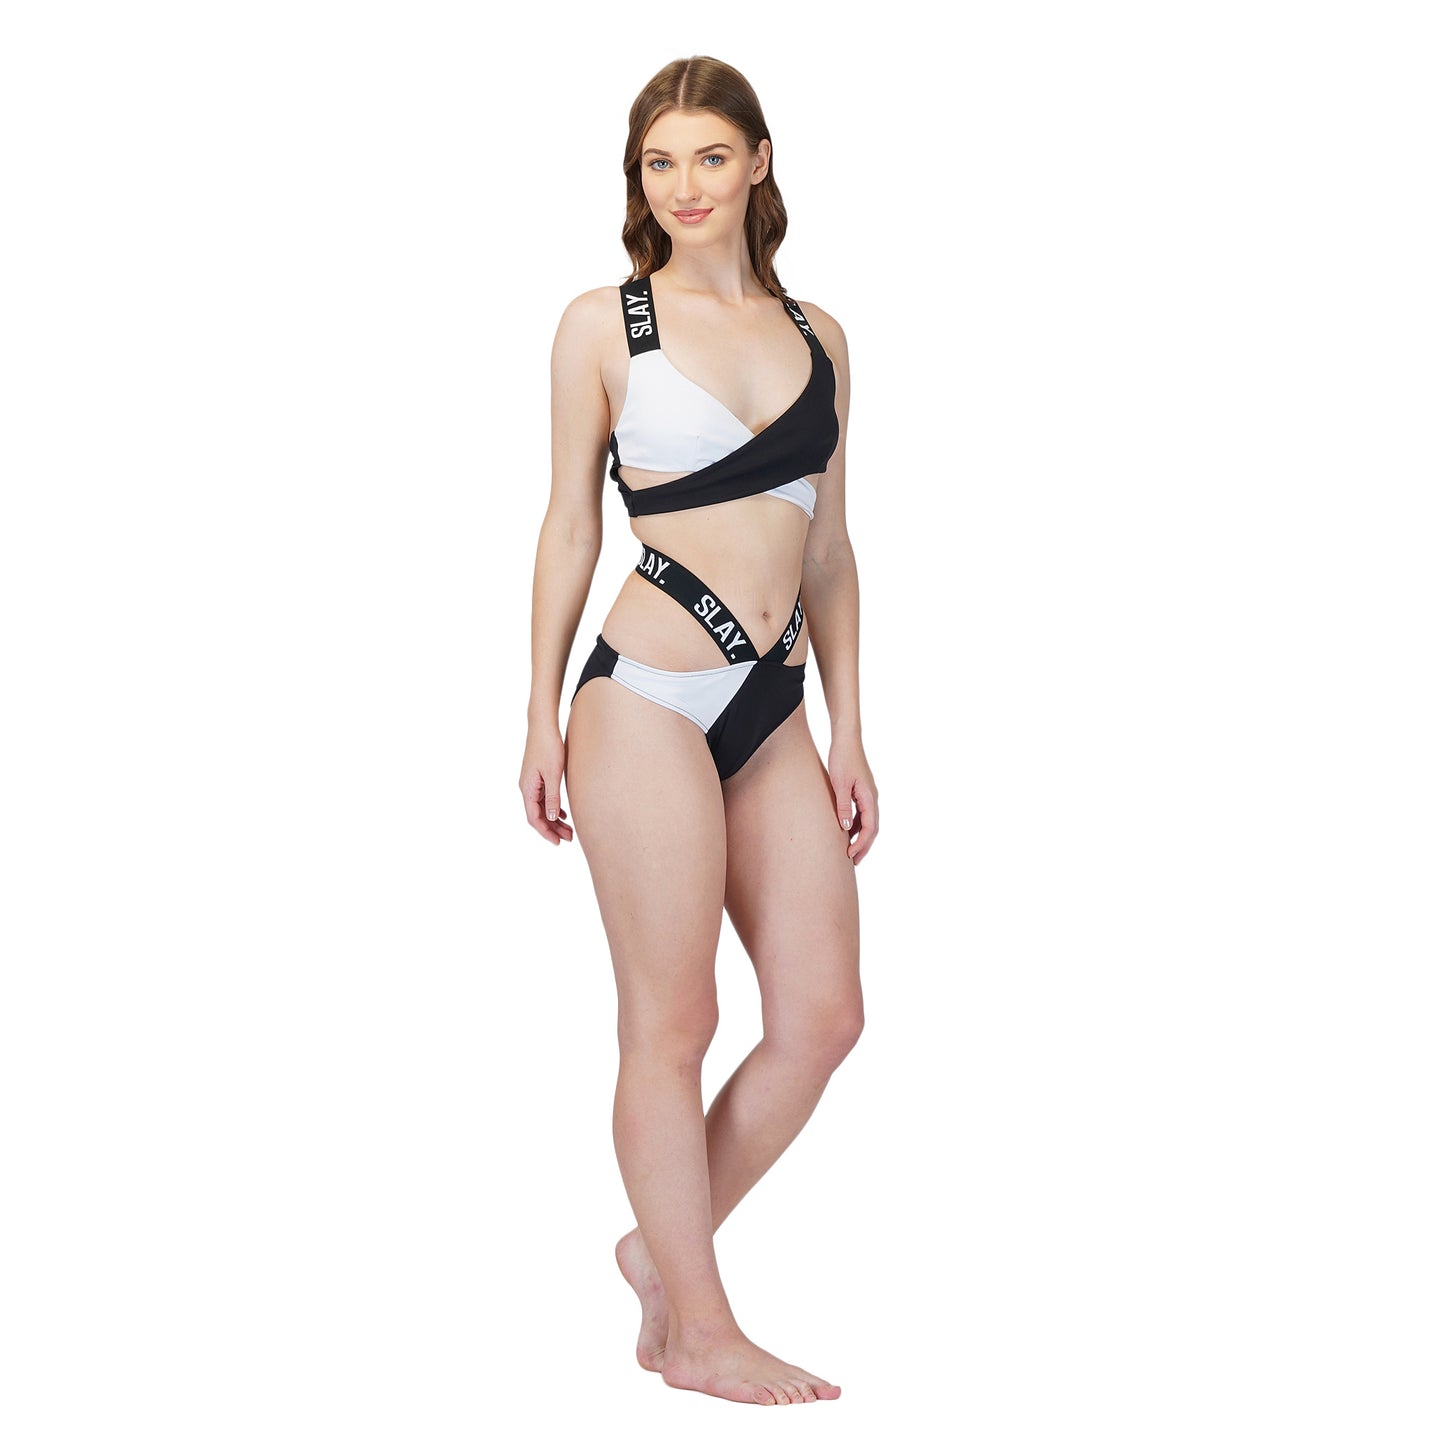 SLAY. Sport Women's Black & White Colorblock Bikini Set Swimwear